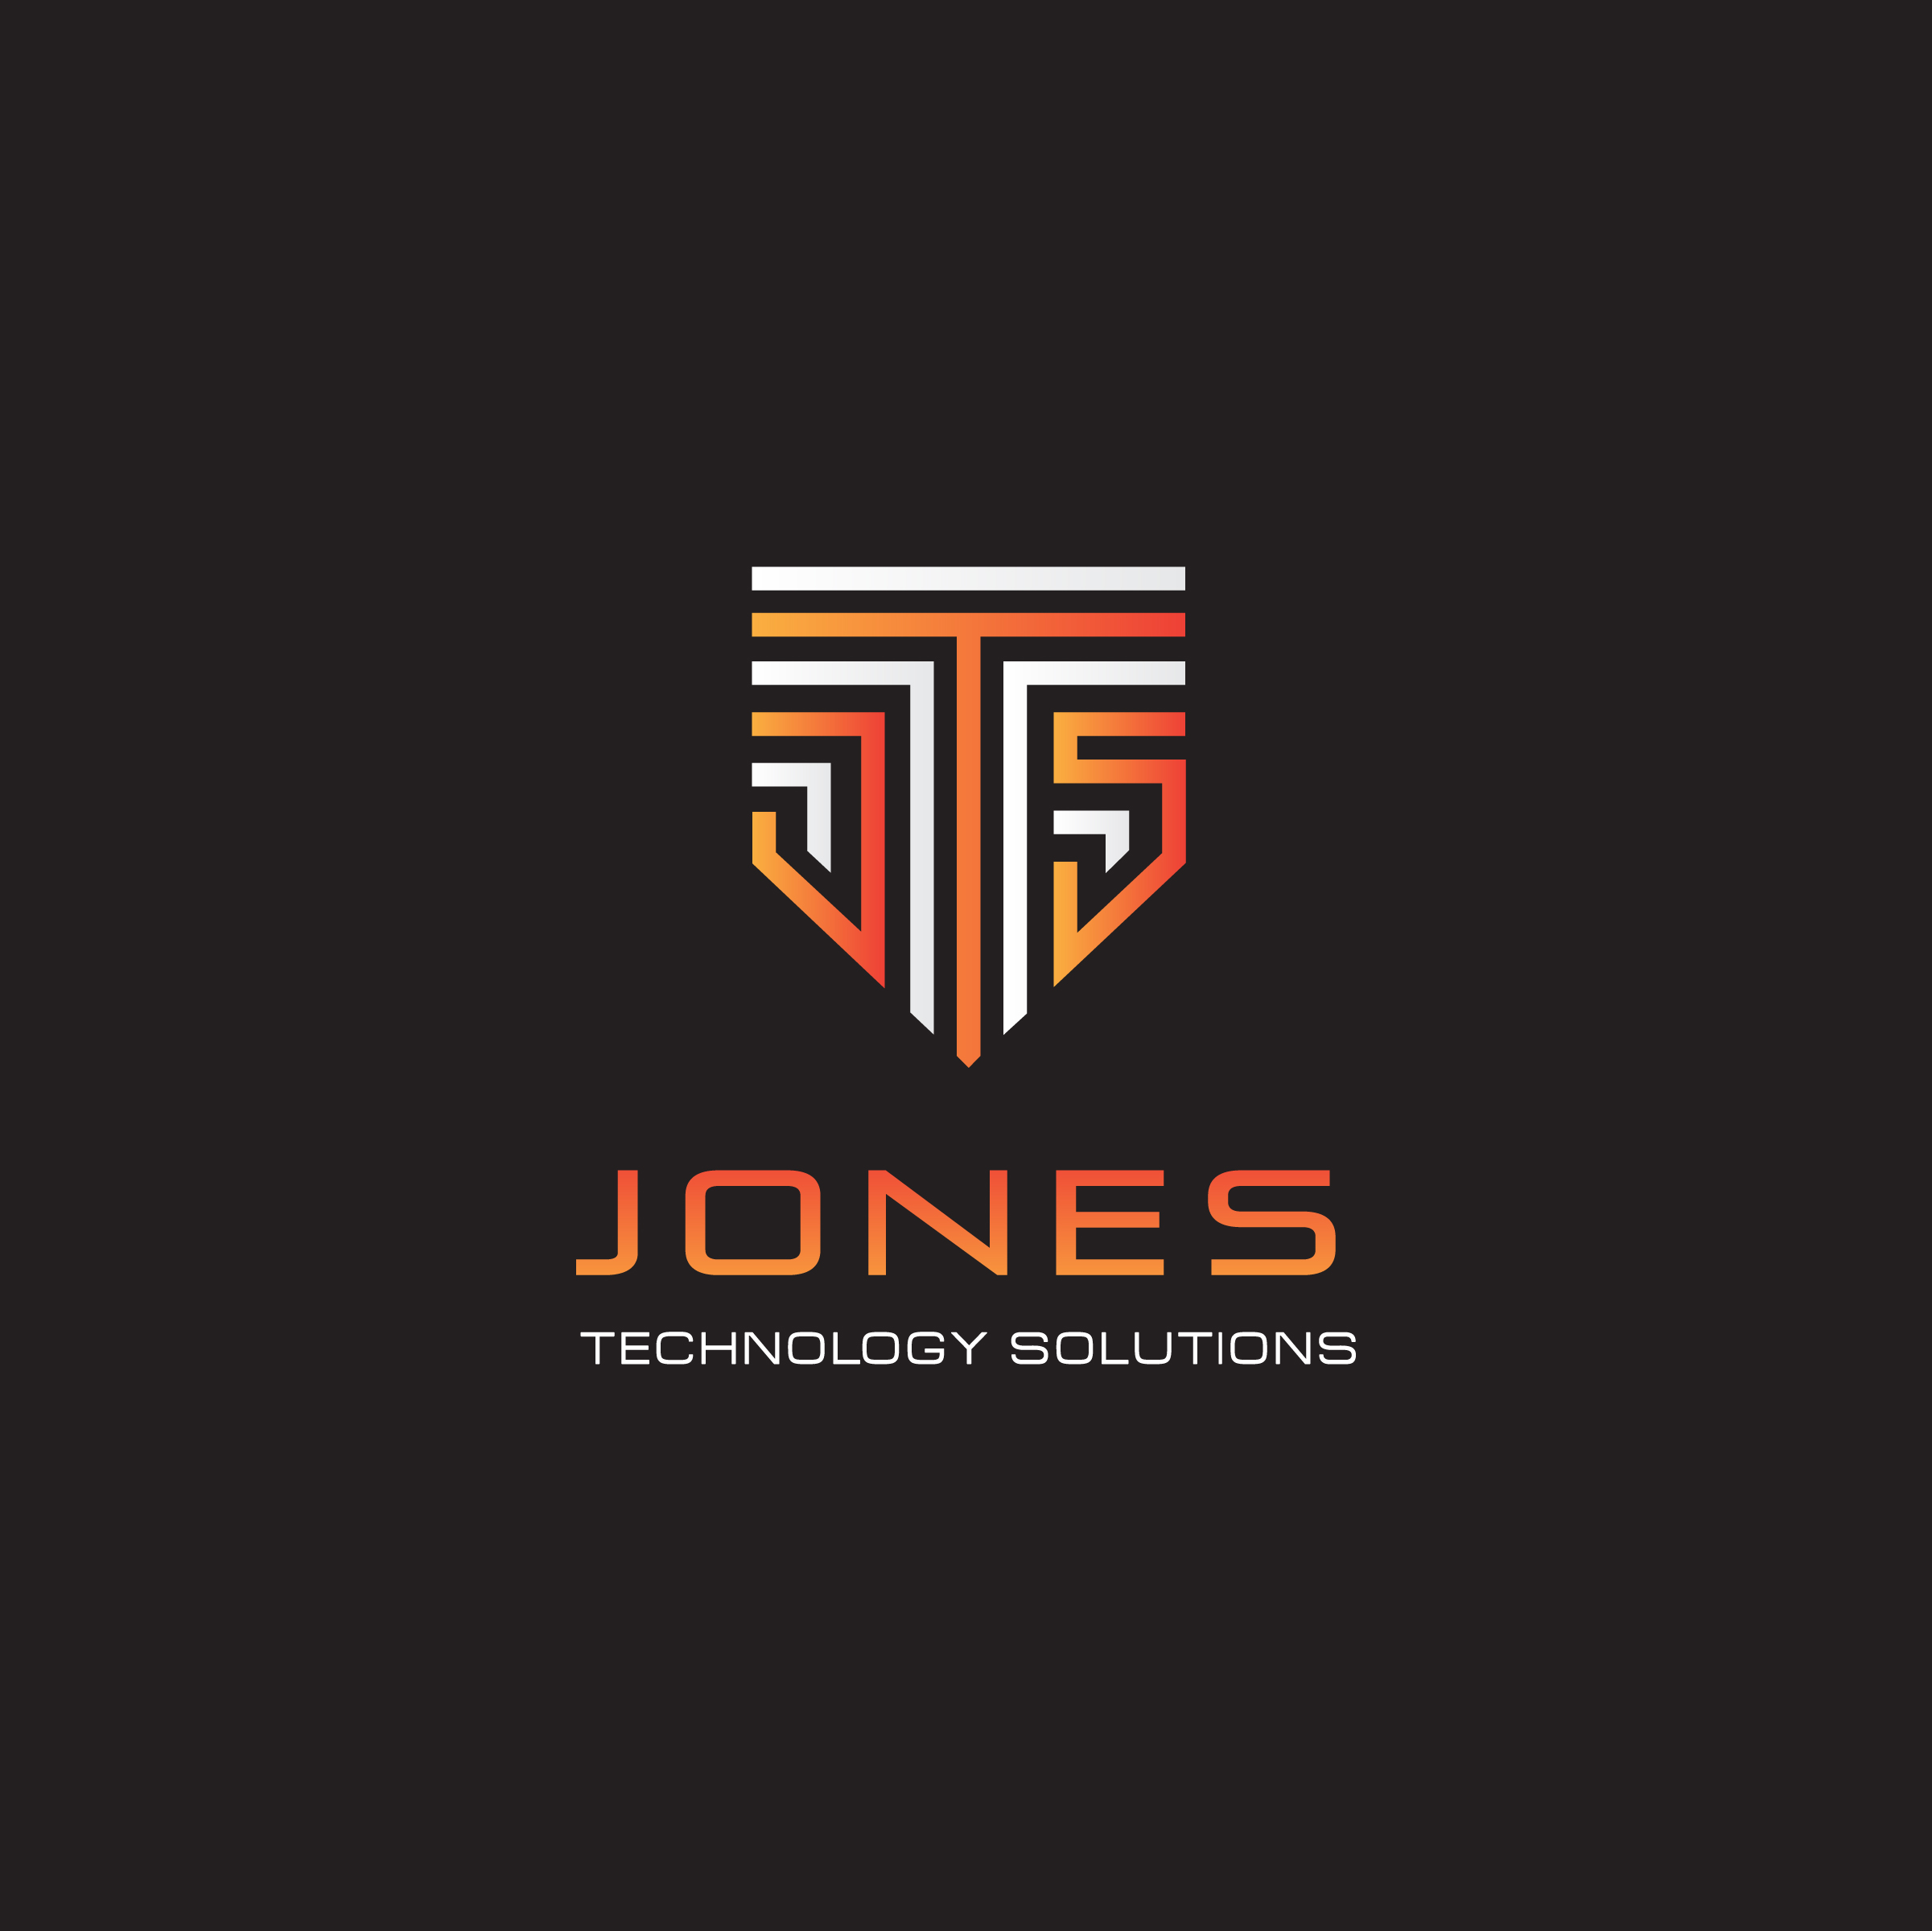 Jones Technology Solutions